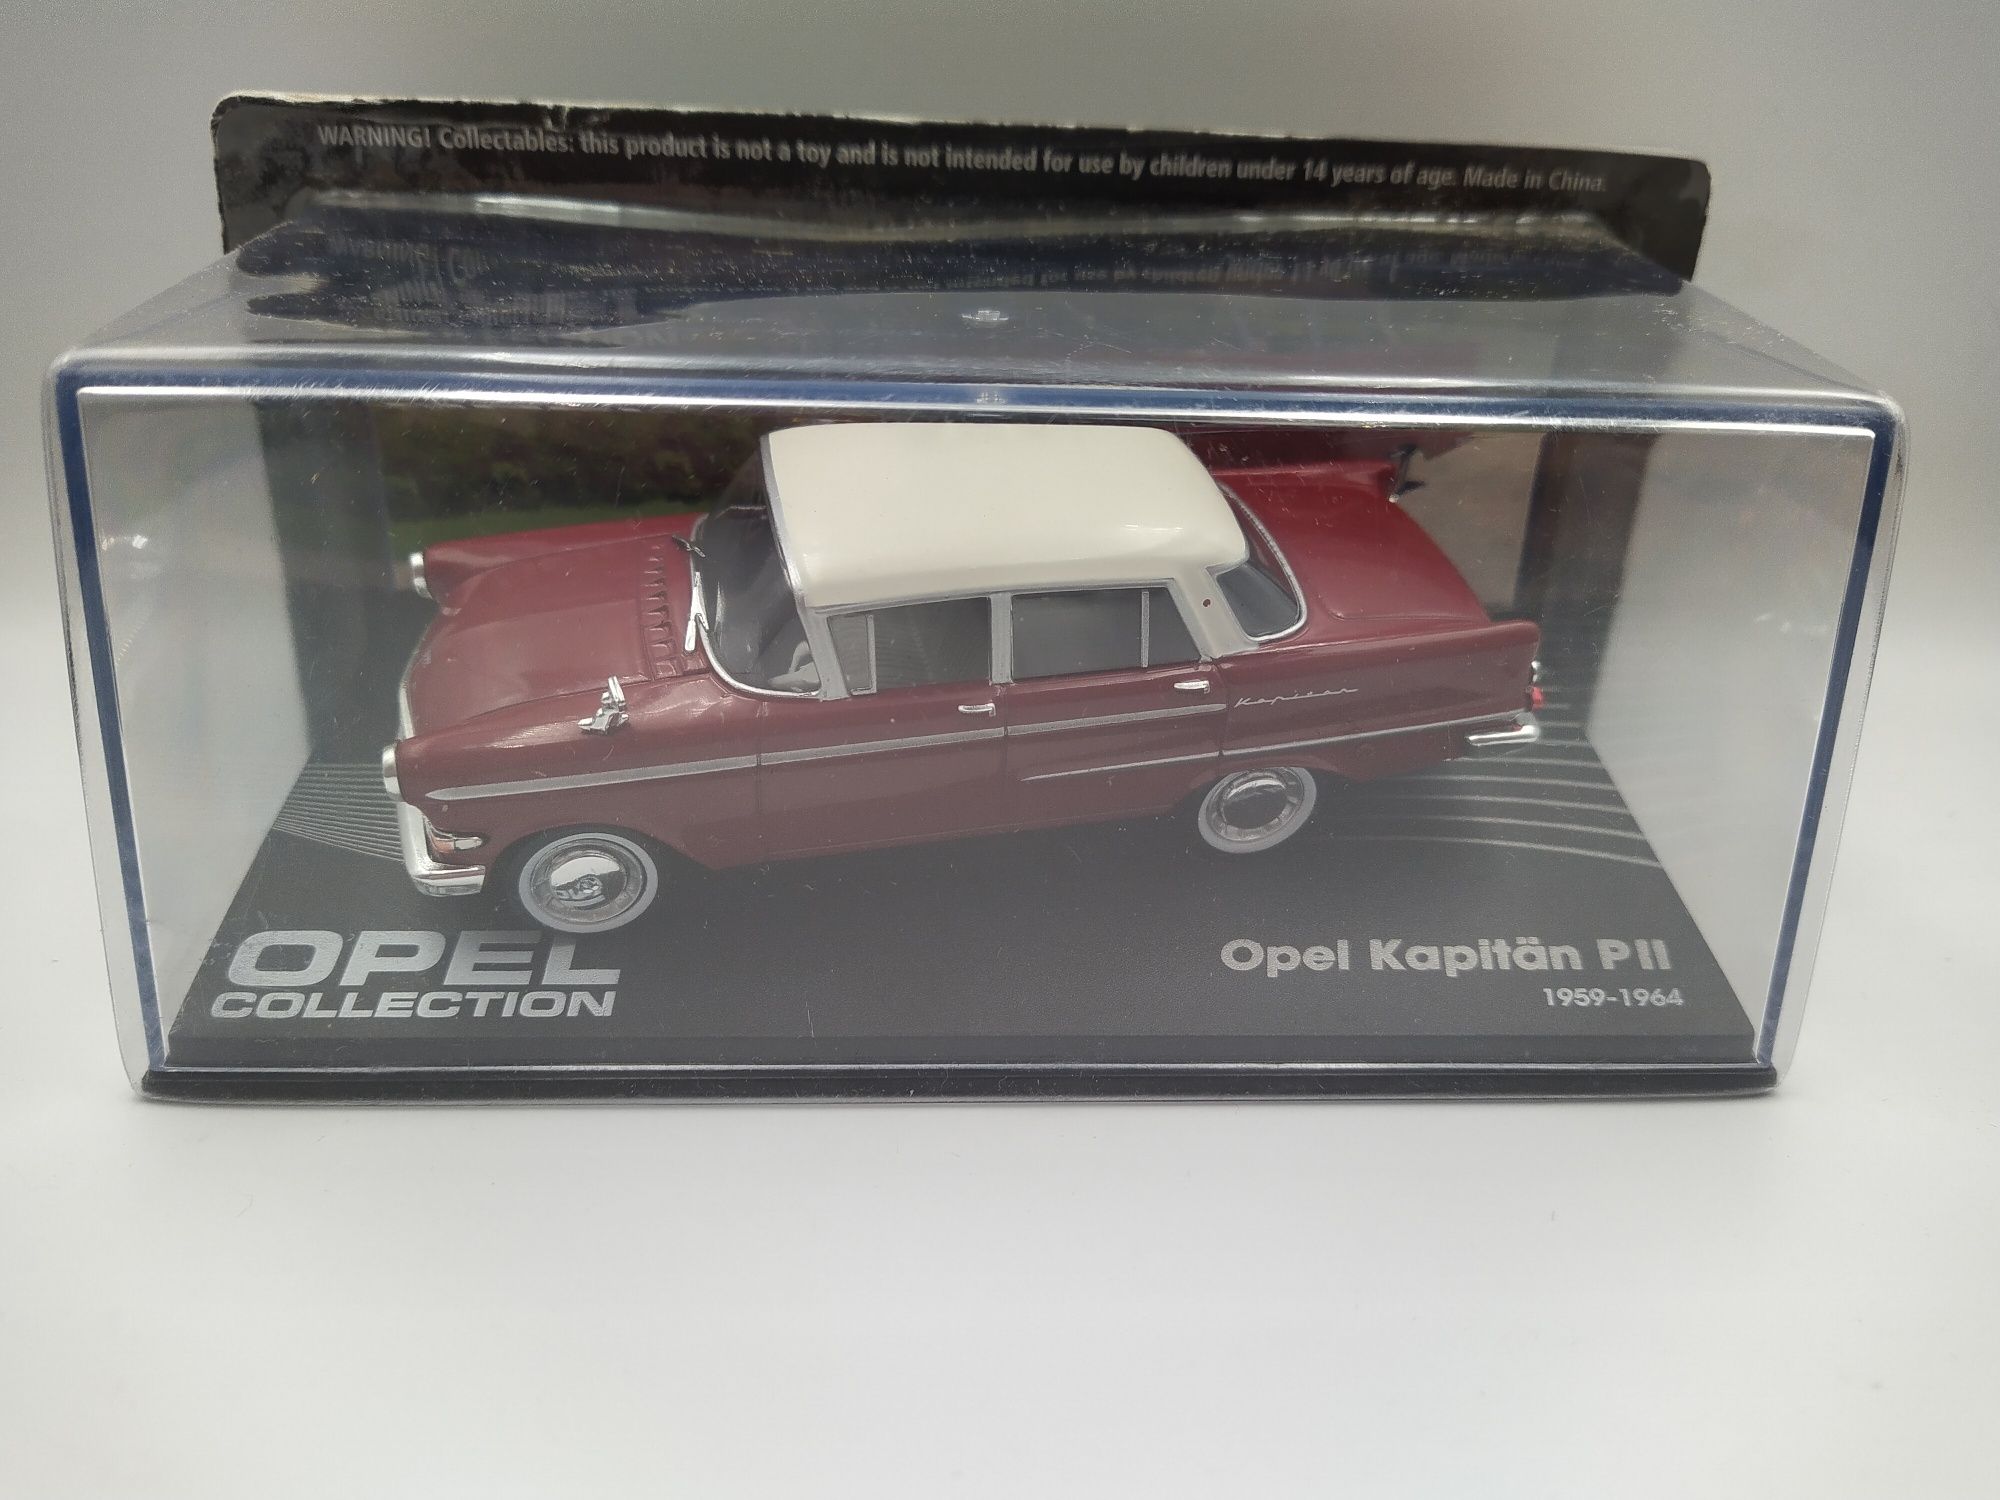 Opel Kapitan PII opel collection Eaglemoss Altaya 1:43